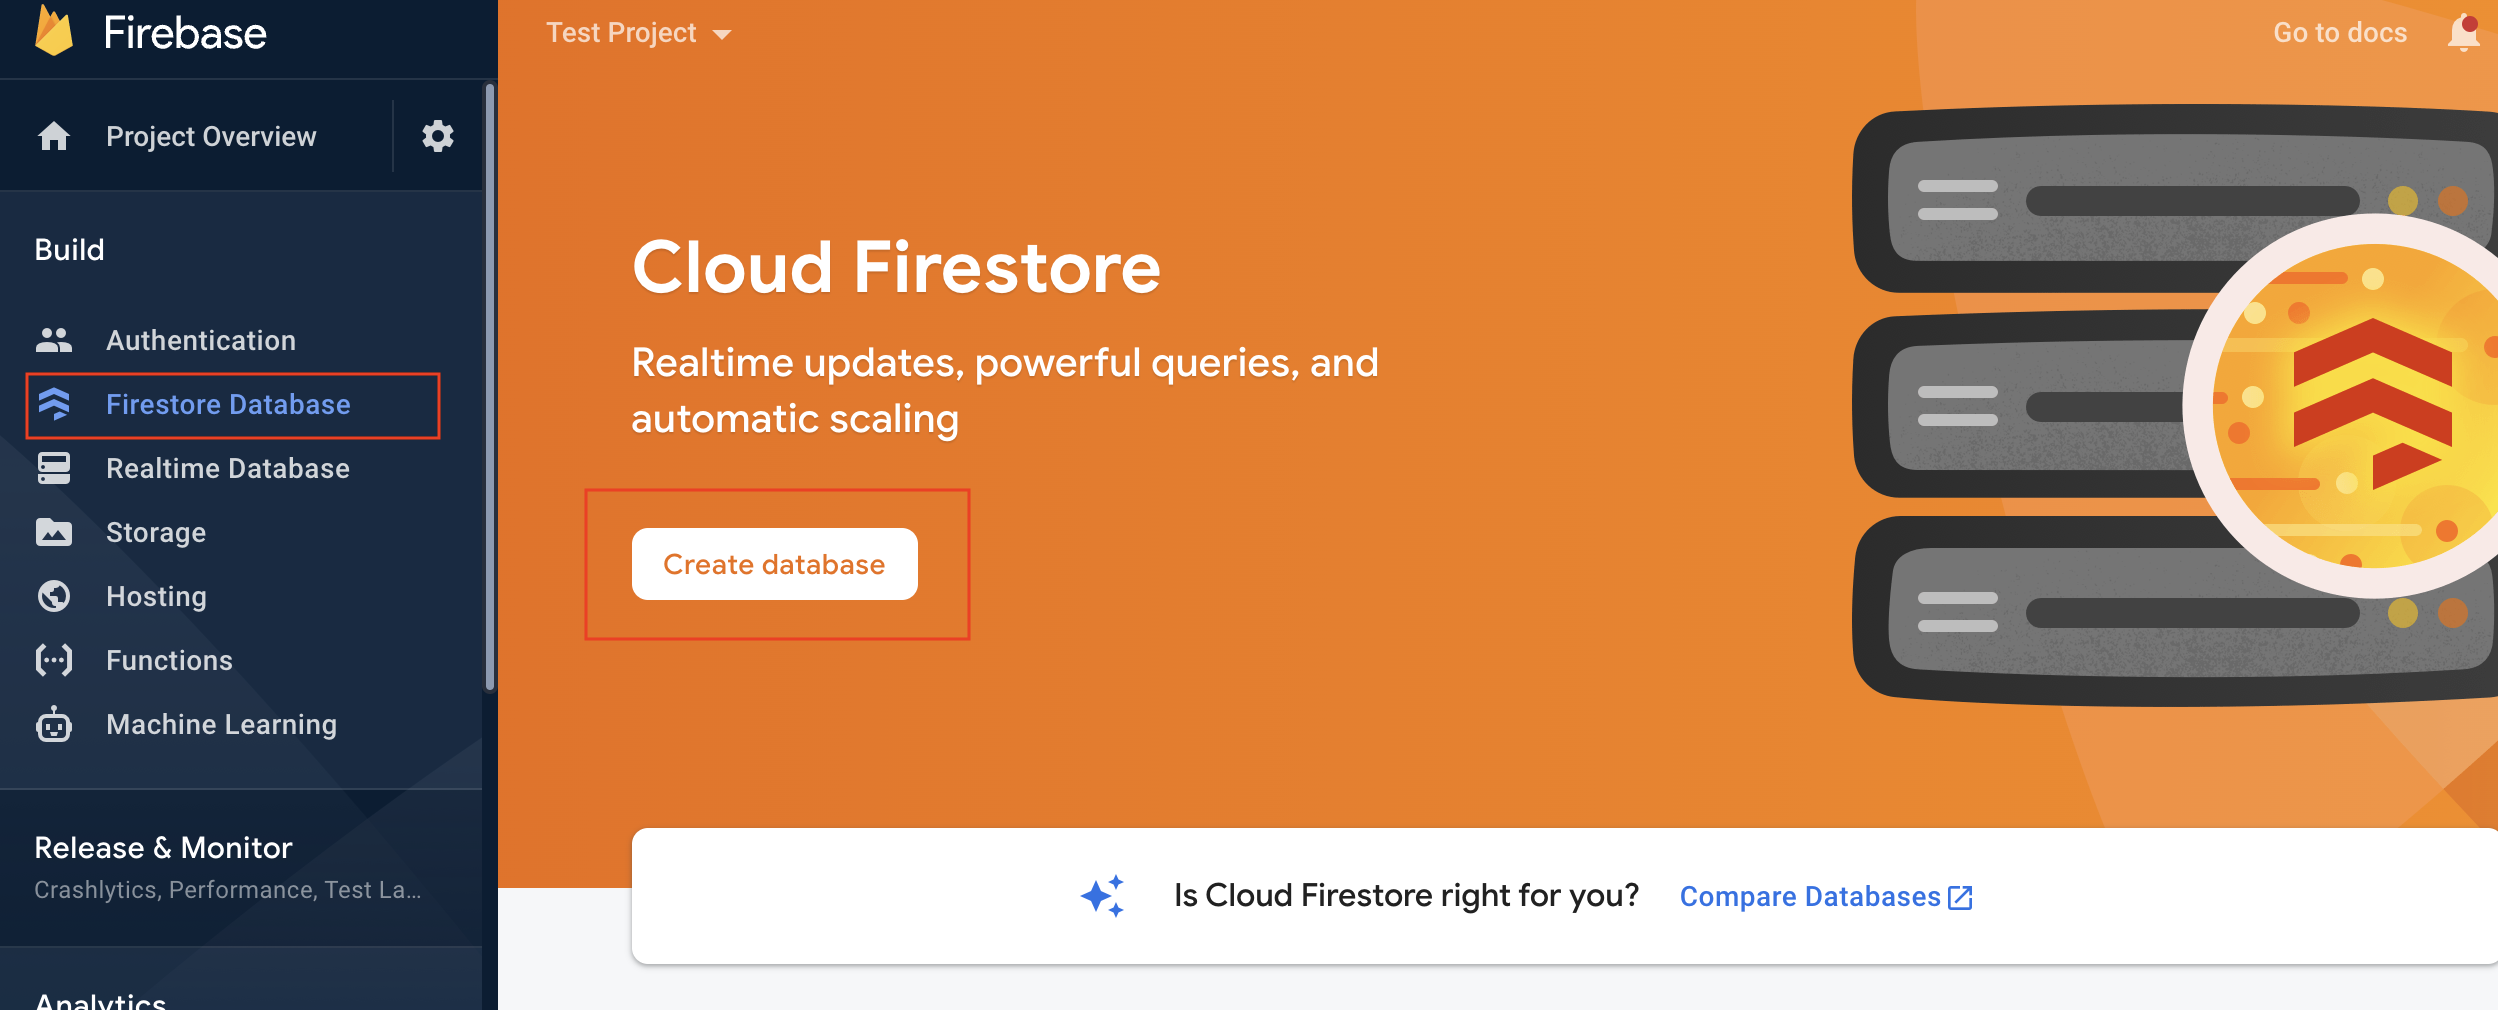 Create a firestore database